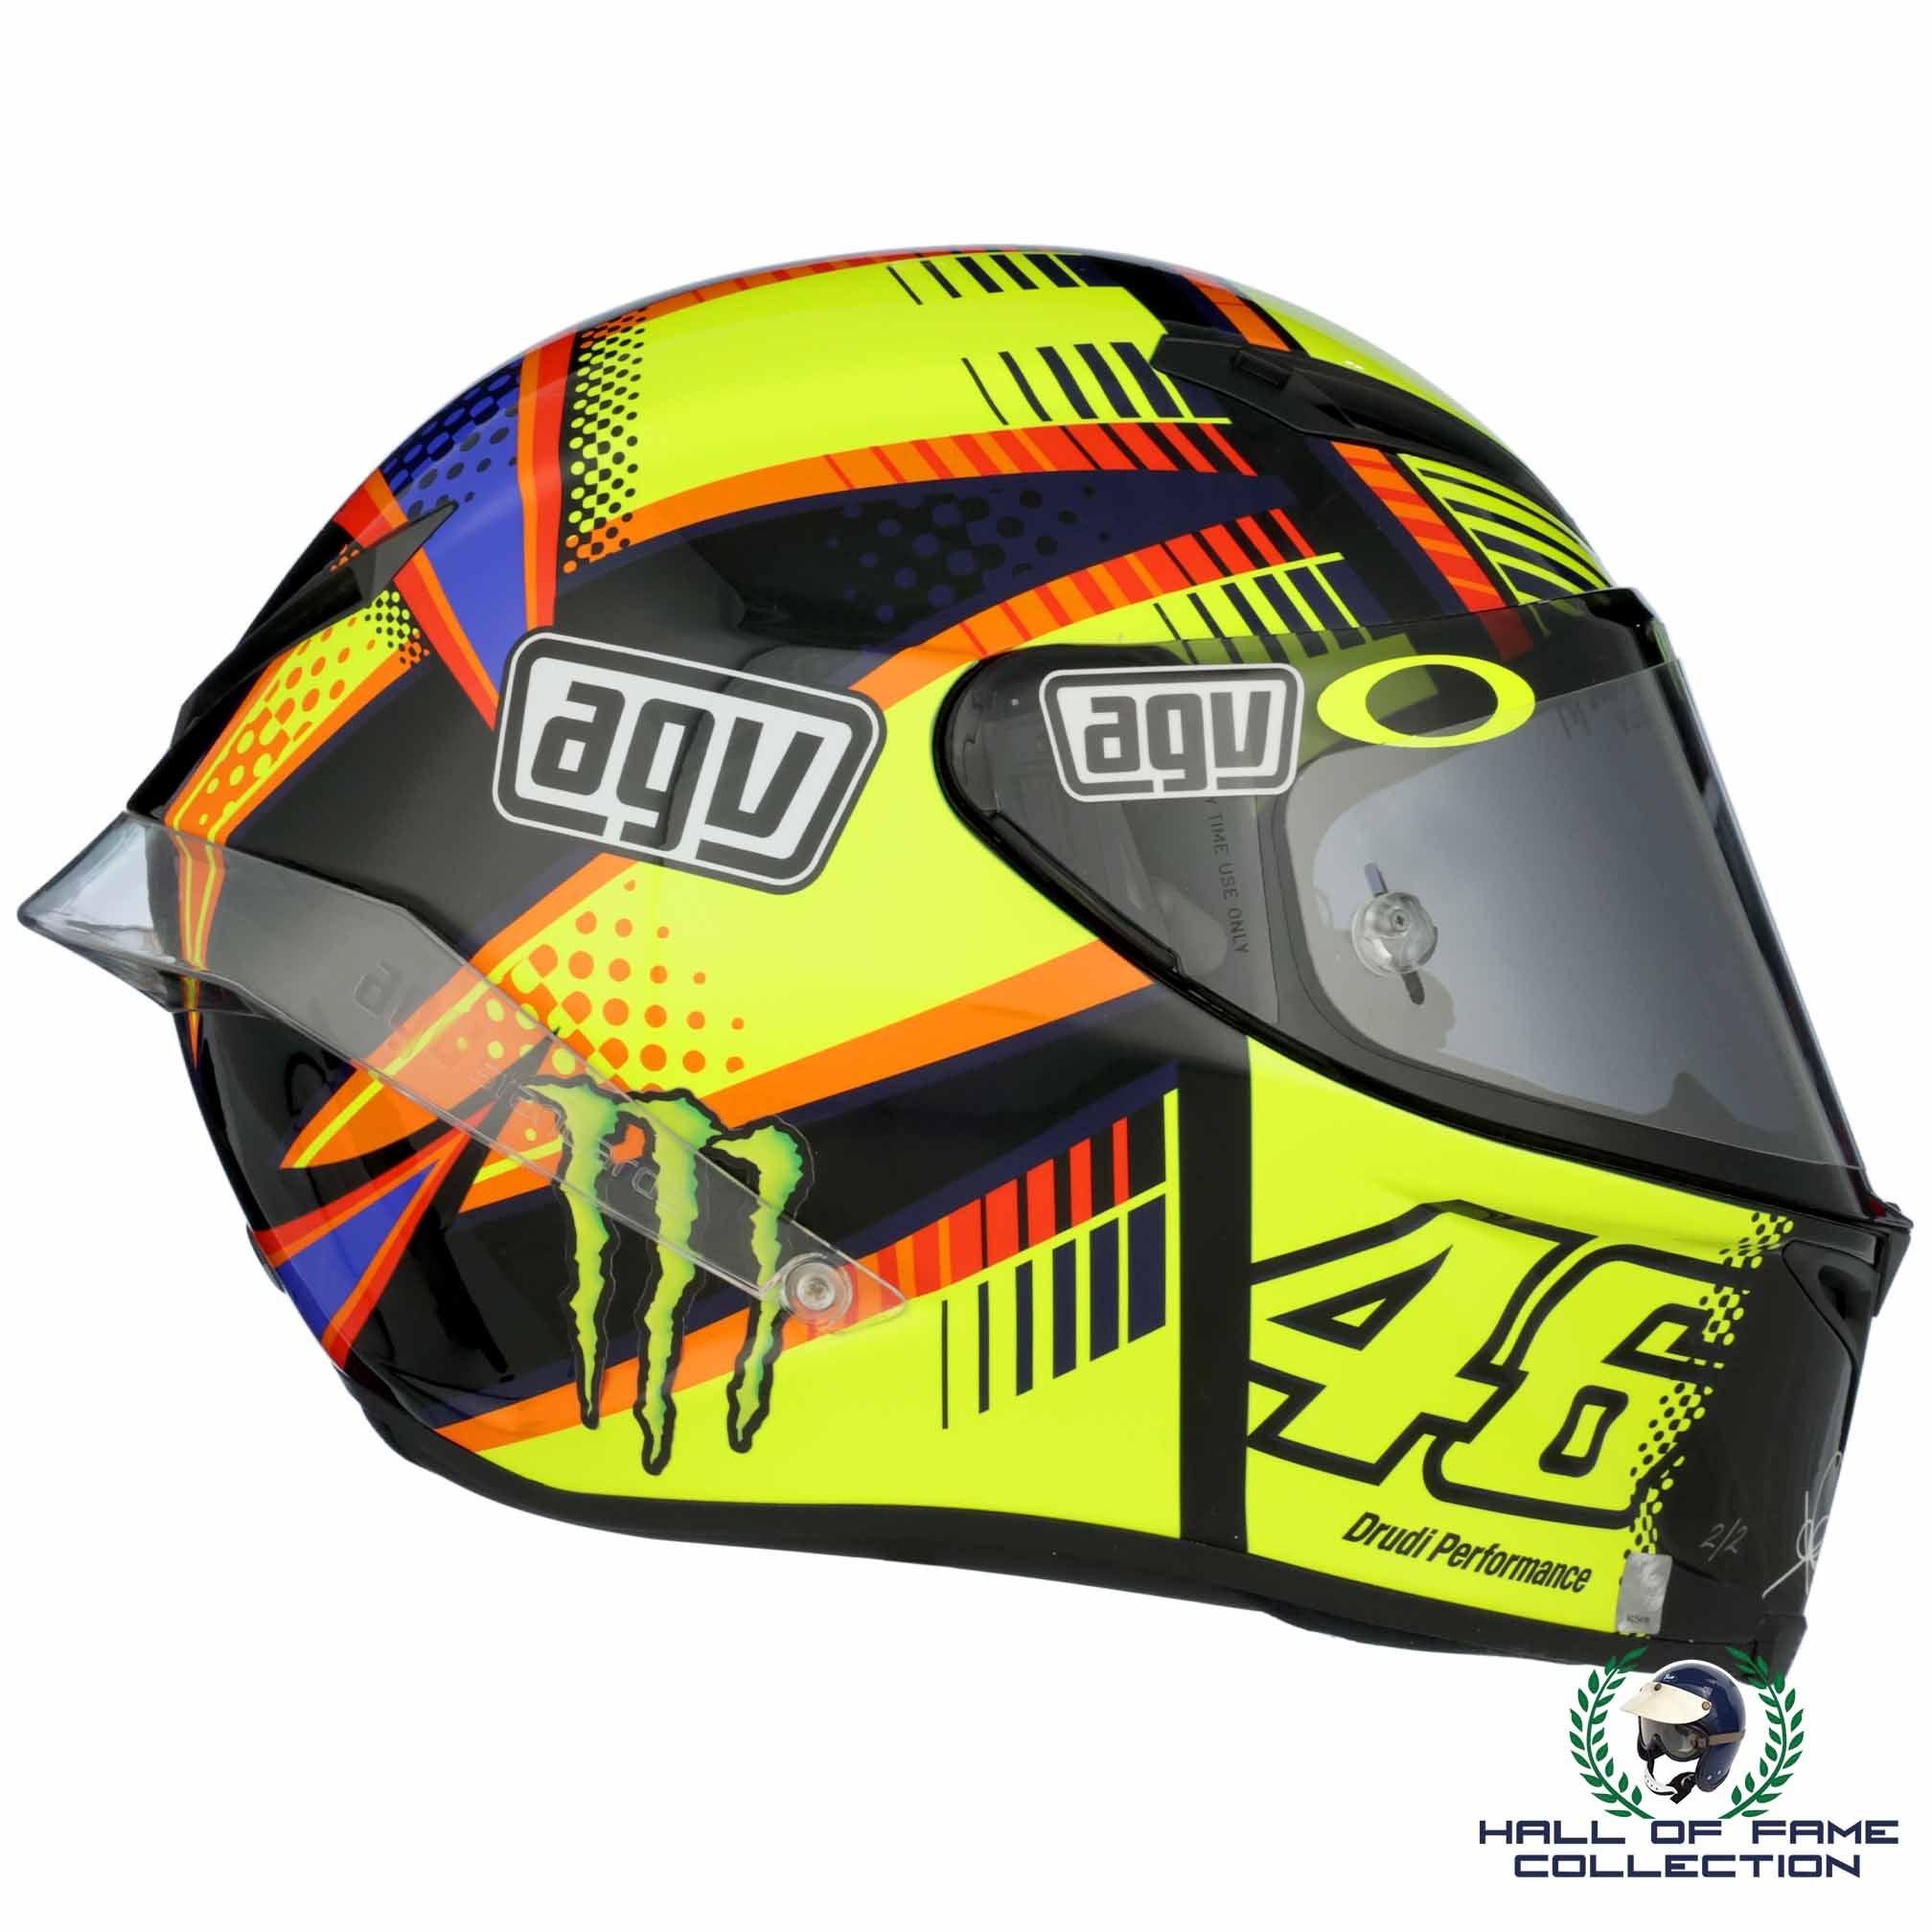 2015 Valentino Rossi Signed Qatar Team Yamaha Limited Edition Replica Helmet